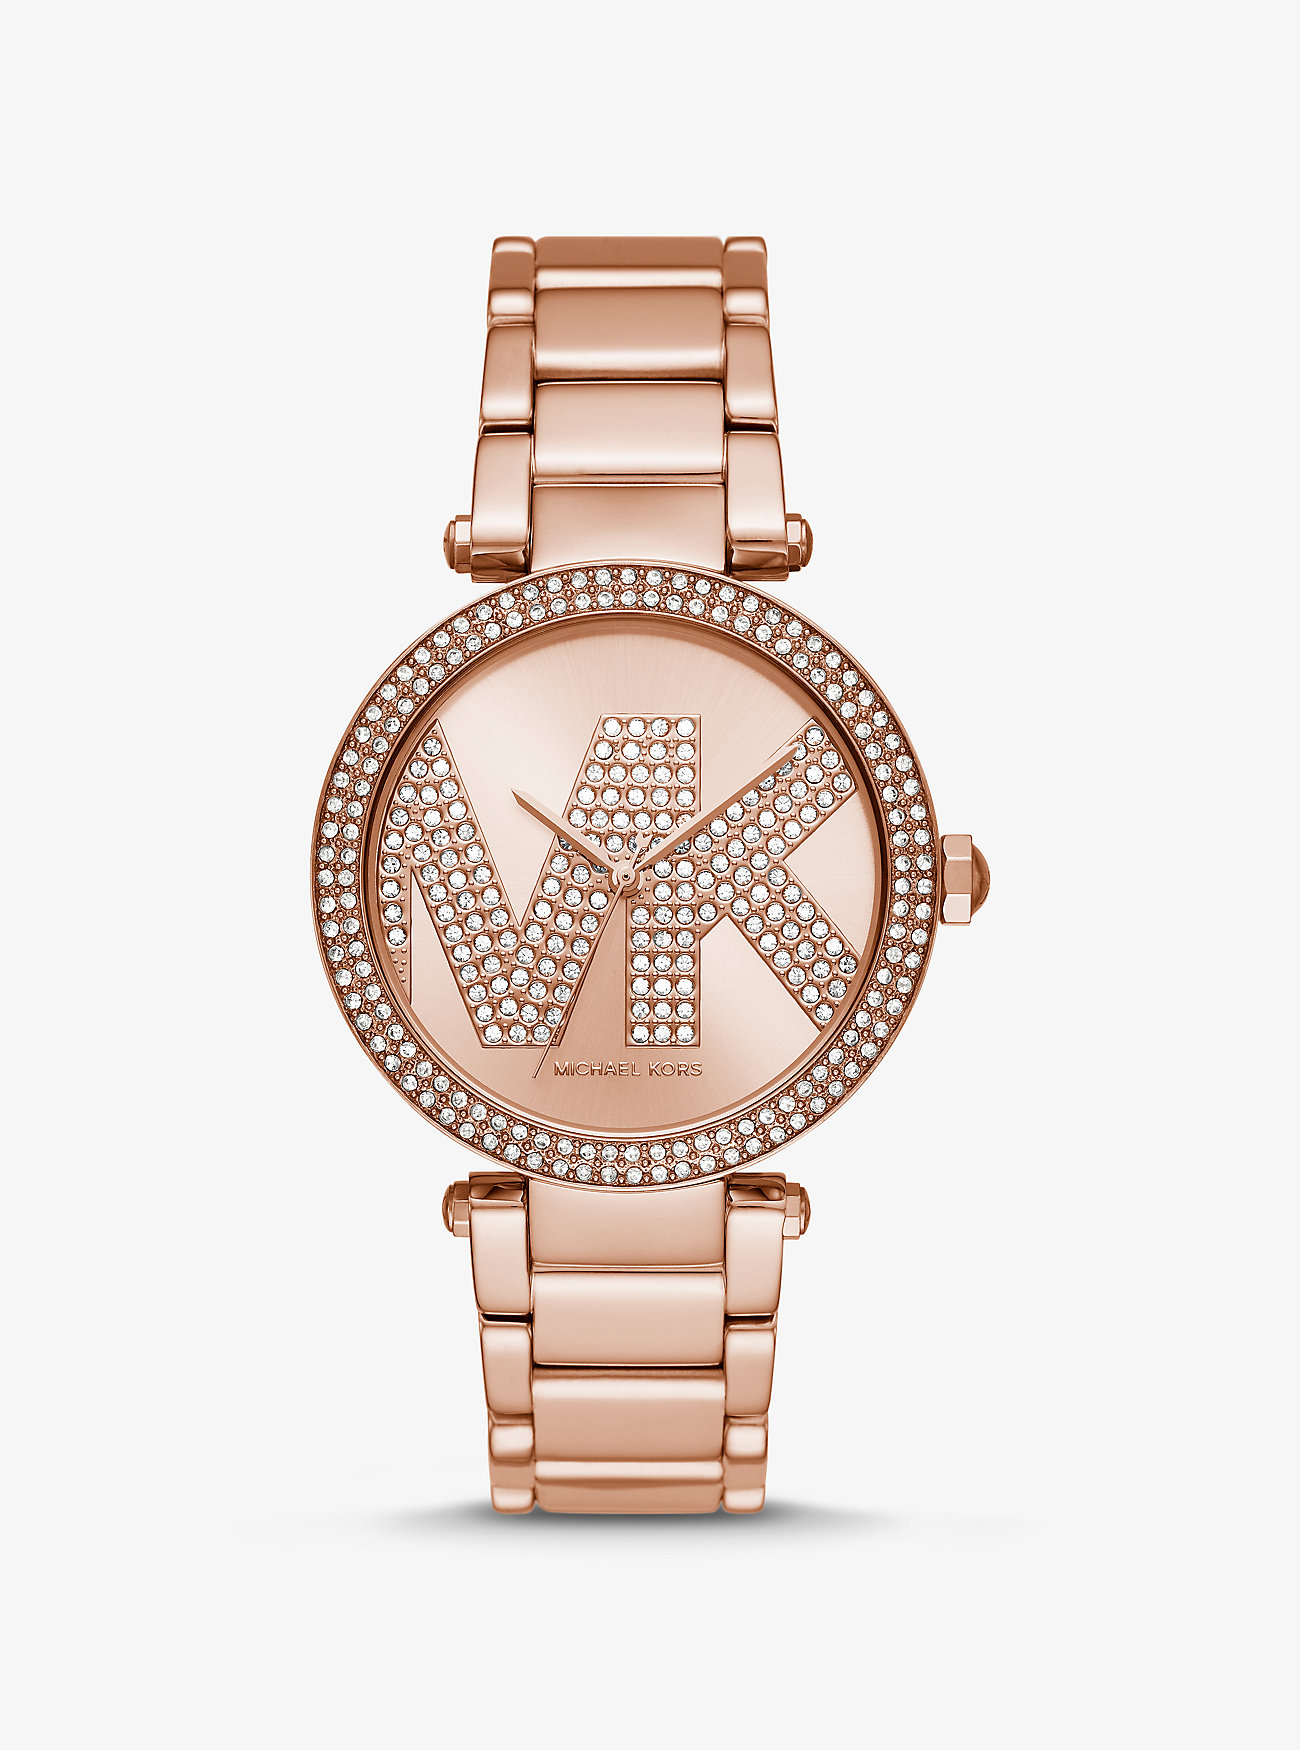 Michaelkors Oversized Pave Logo Rose Gold-Tone Watch